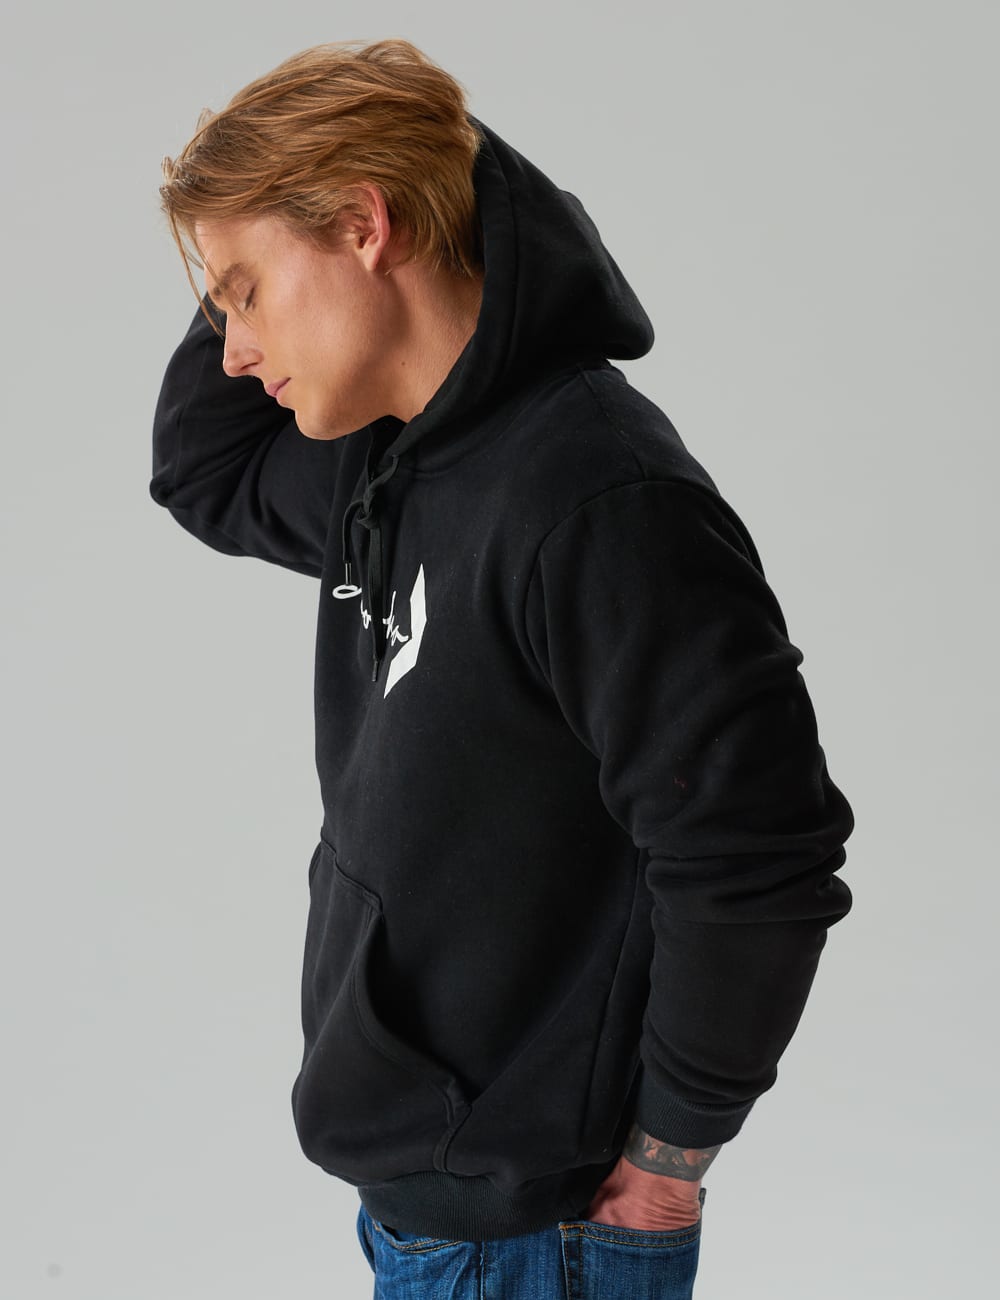 model wearing a black dooko hooded sweatshirt by dooko